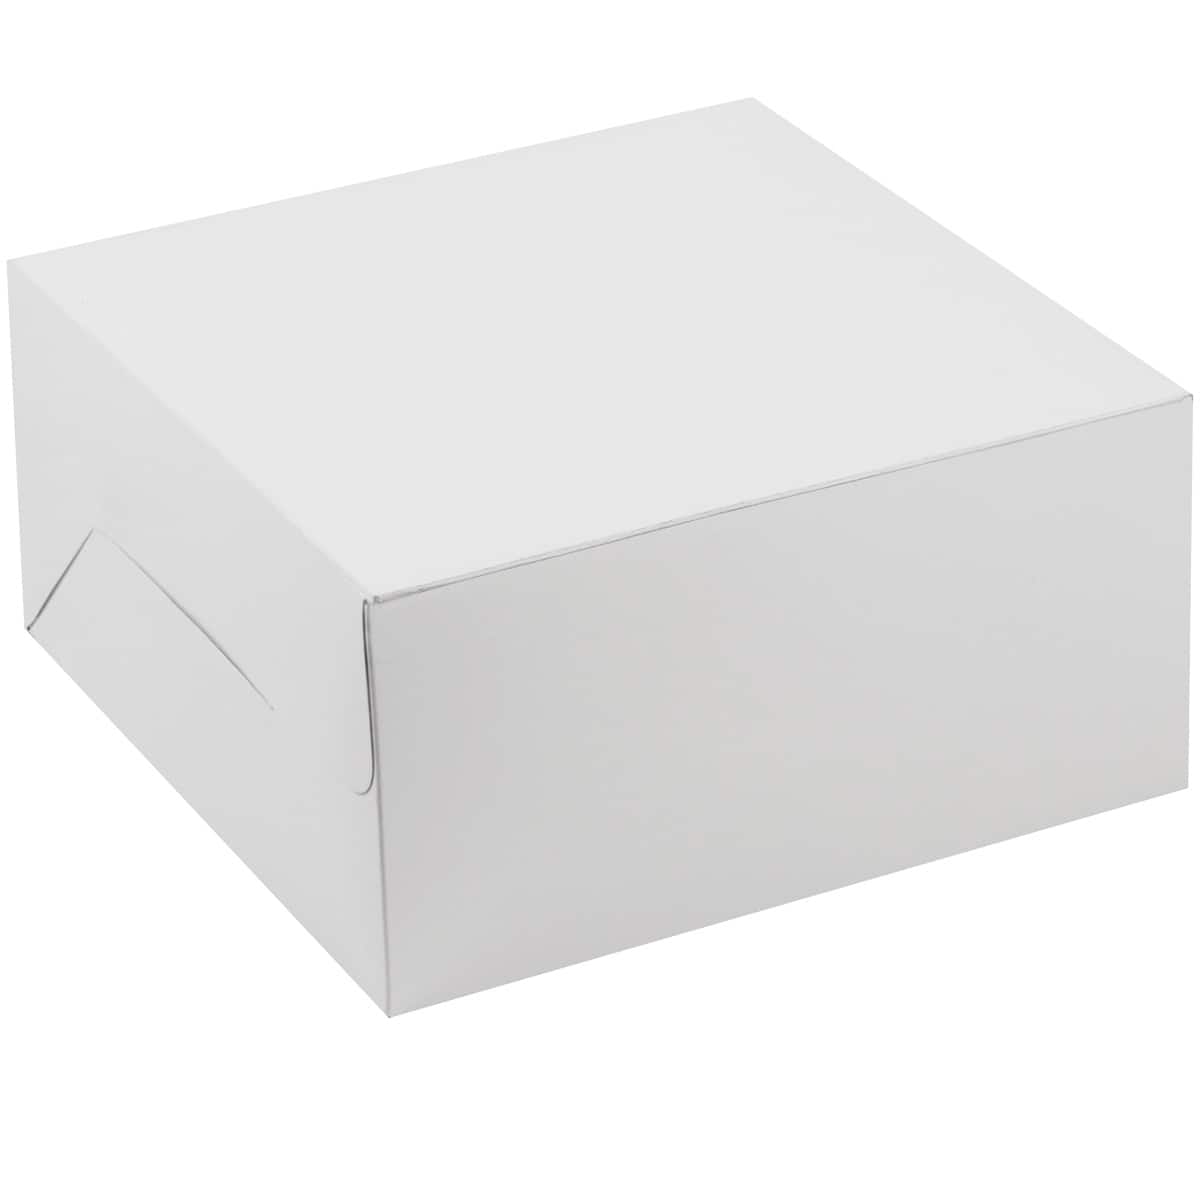 Rigid square cake box 15cm high with tray - 20 to 30cm - Planète Gateau